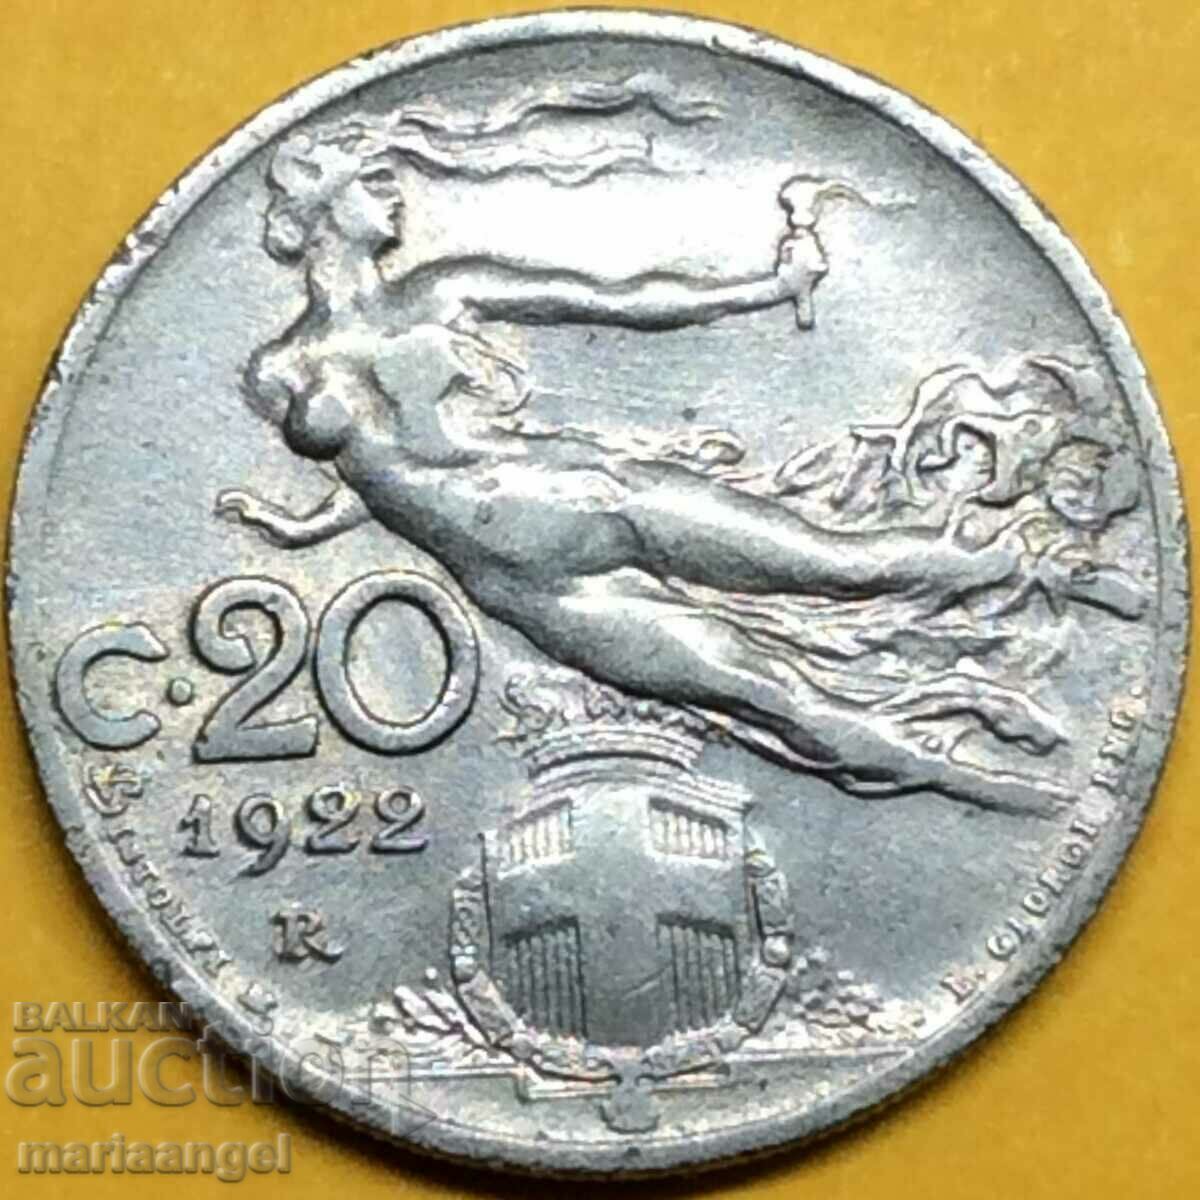 Italy 1922 20 centesimi - becoming rare